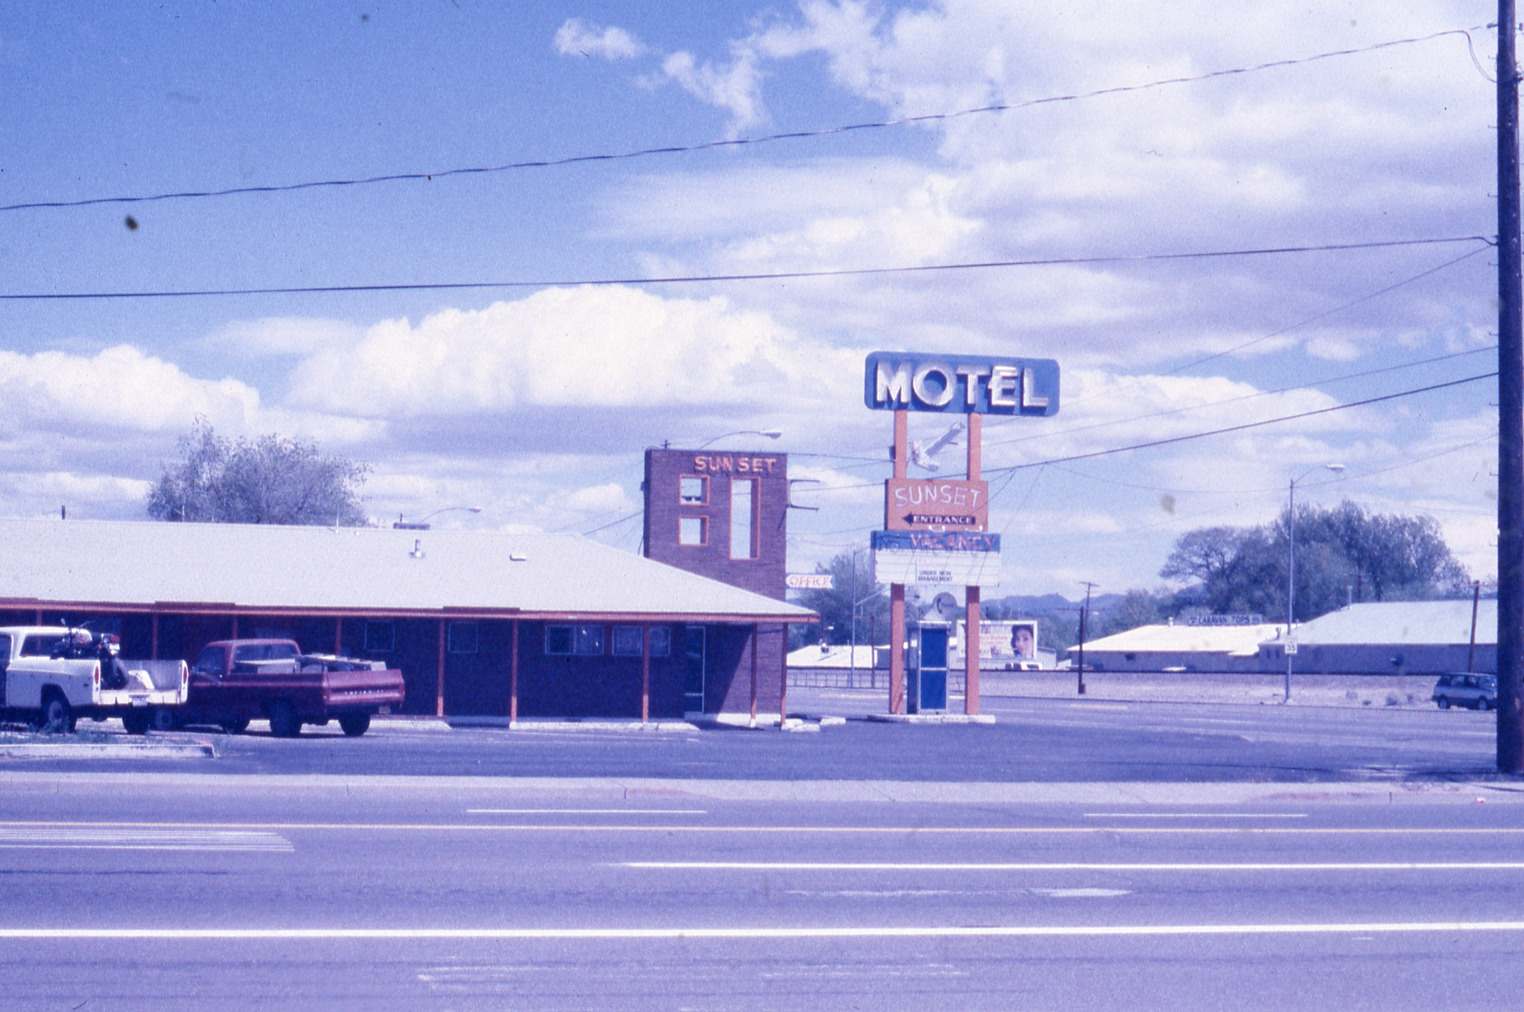 Sunset Motel sign, Reno, Nevada: photographic print